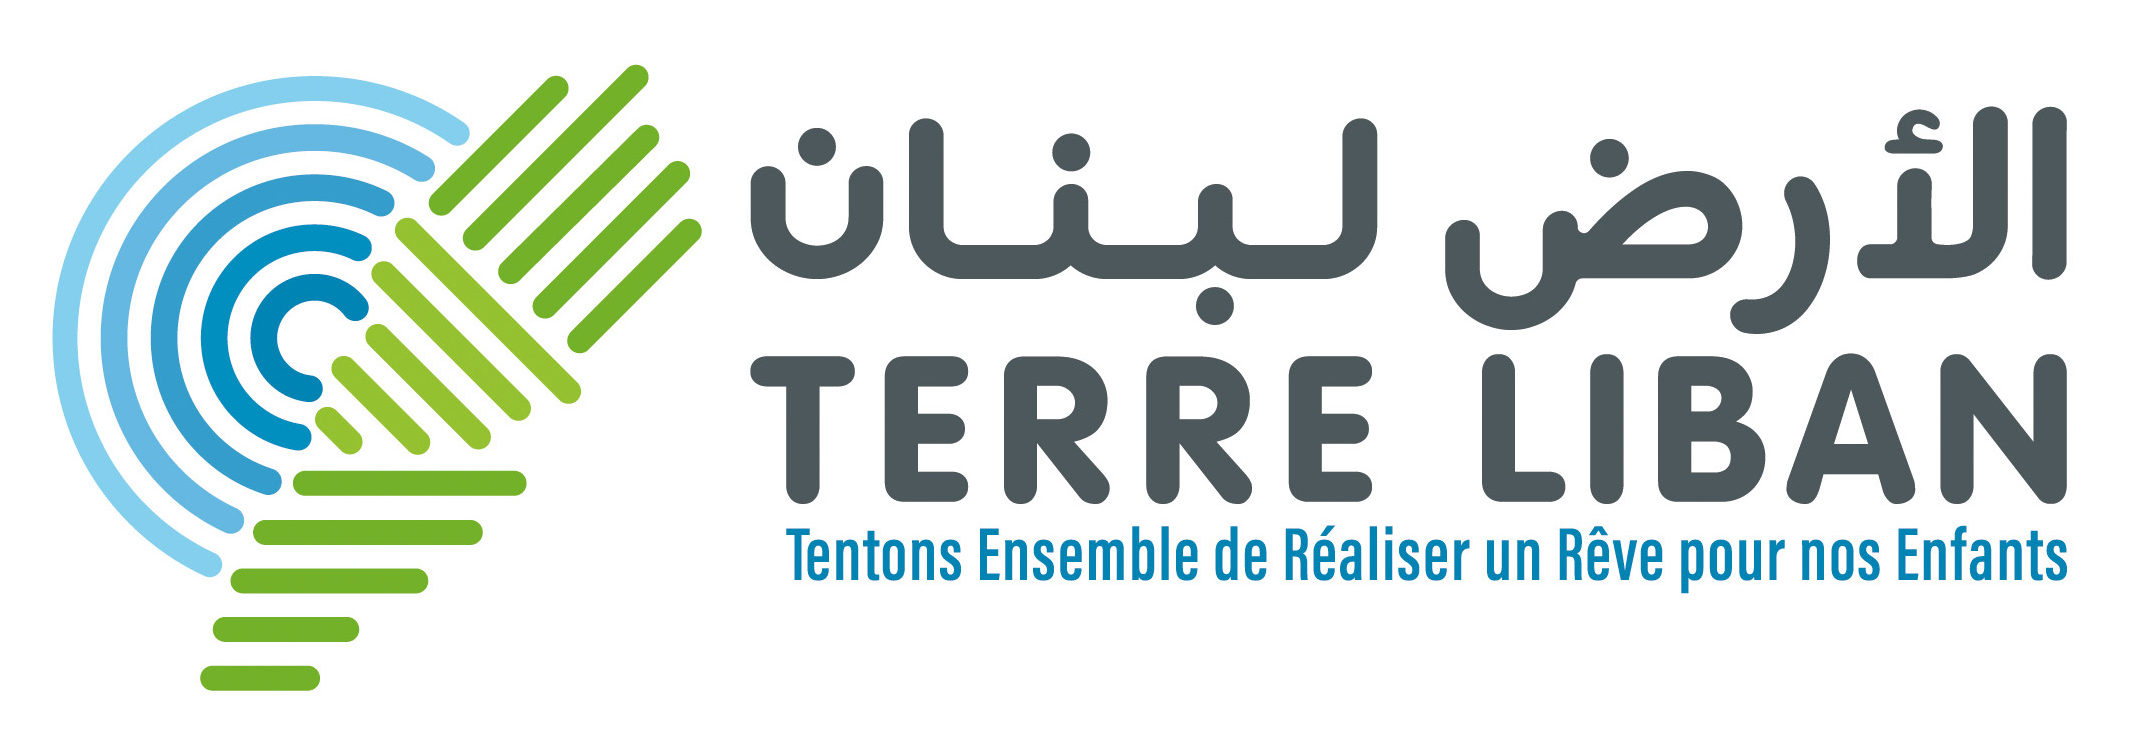 ONG T.E.R.R.E.Liban